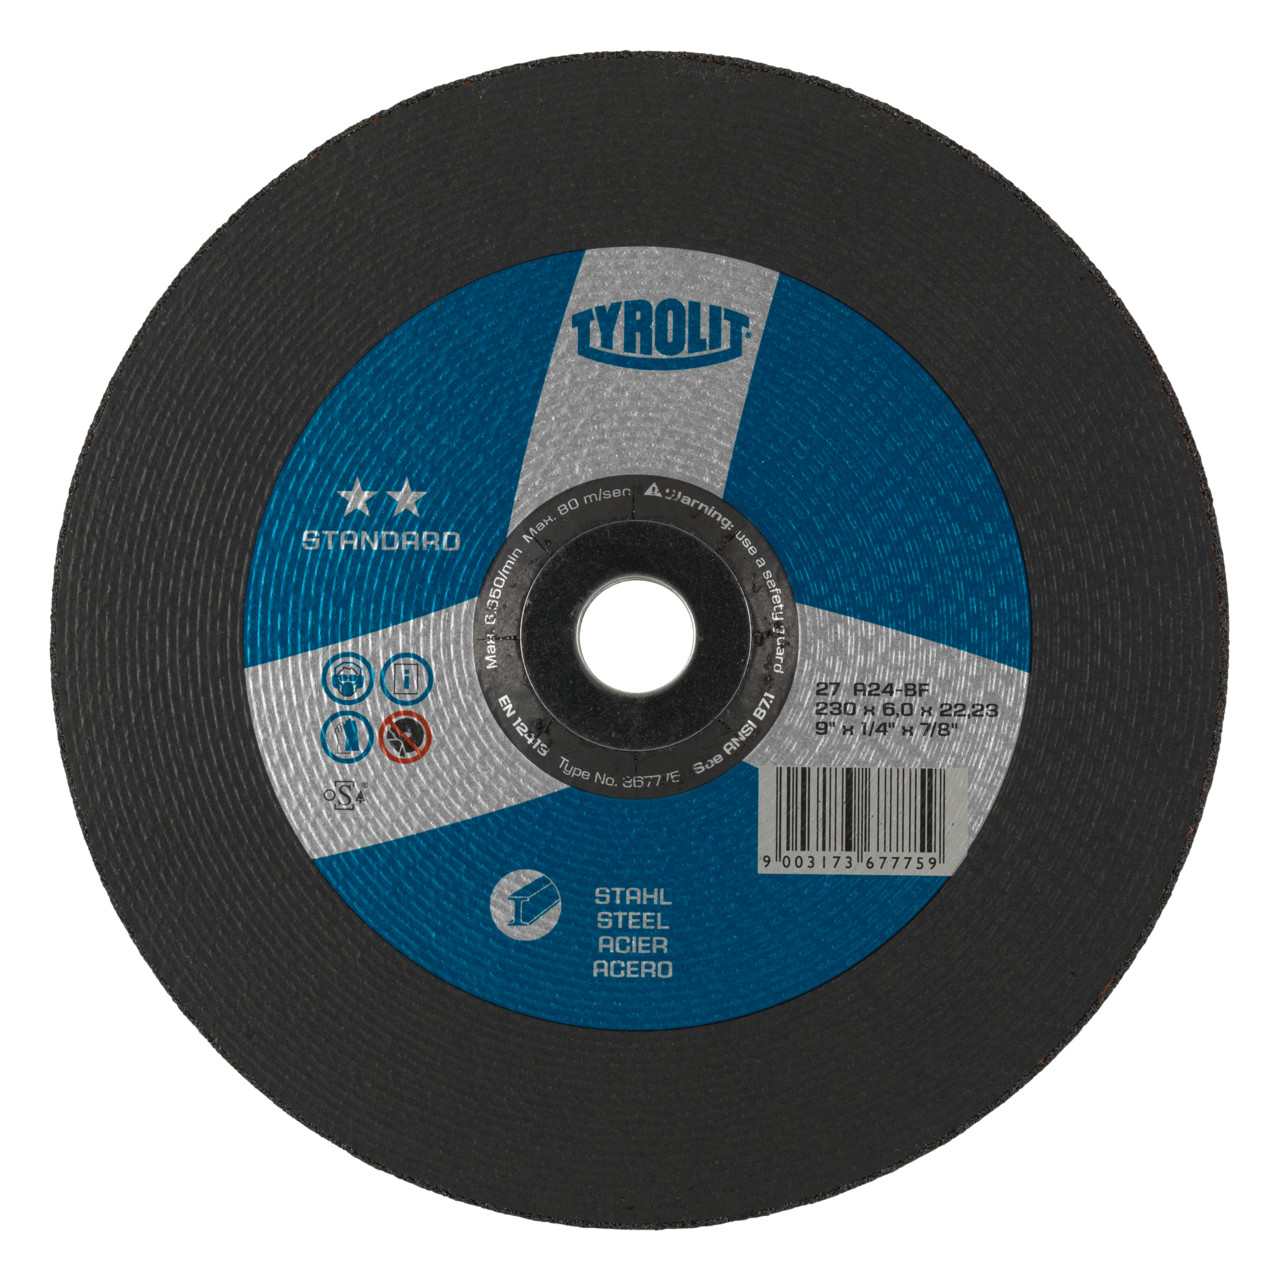 TYROLIT disco de desbaste DxUxH 178x6x22,23 Para acero, forma: 27 - versión offset, Art. 367773